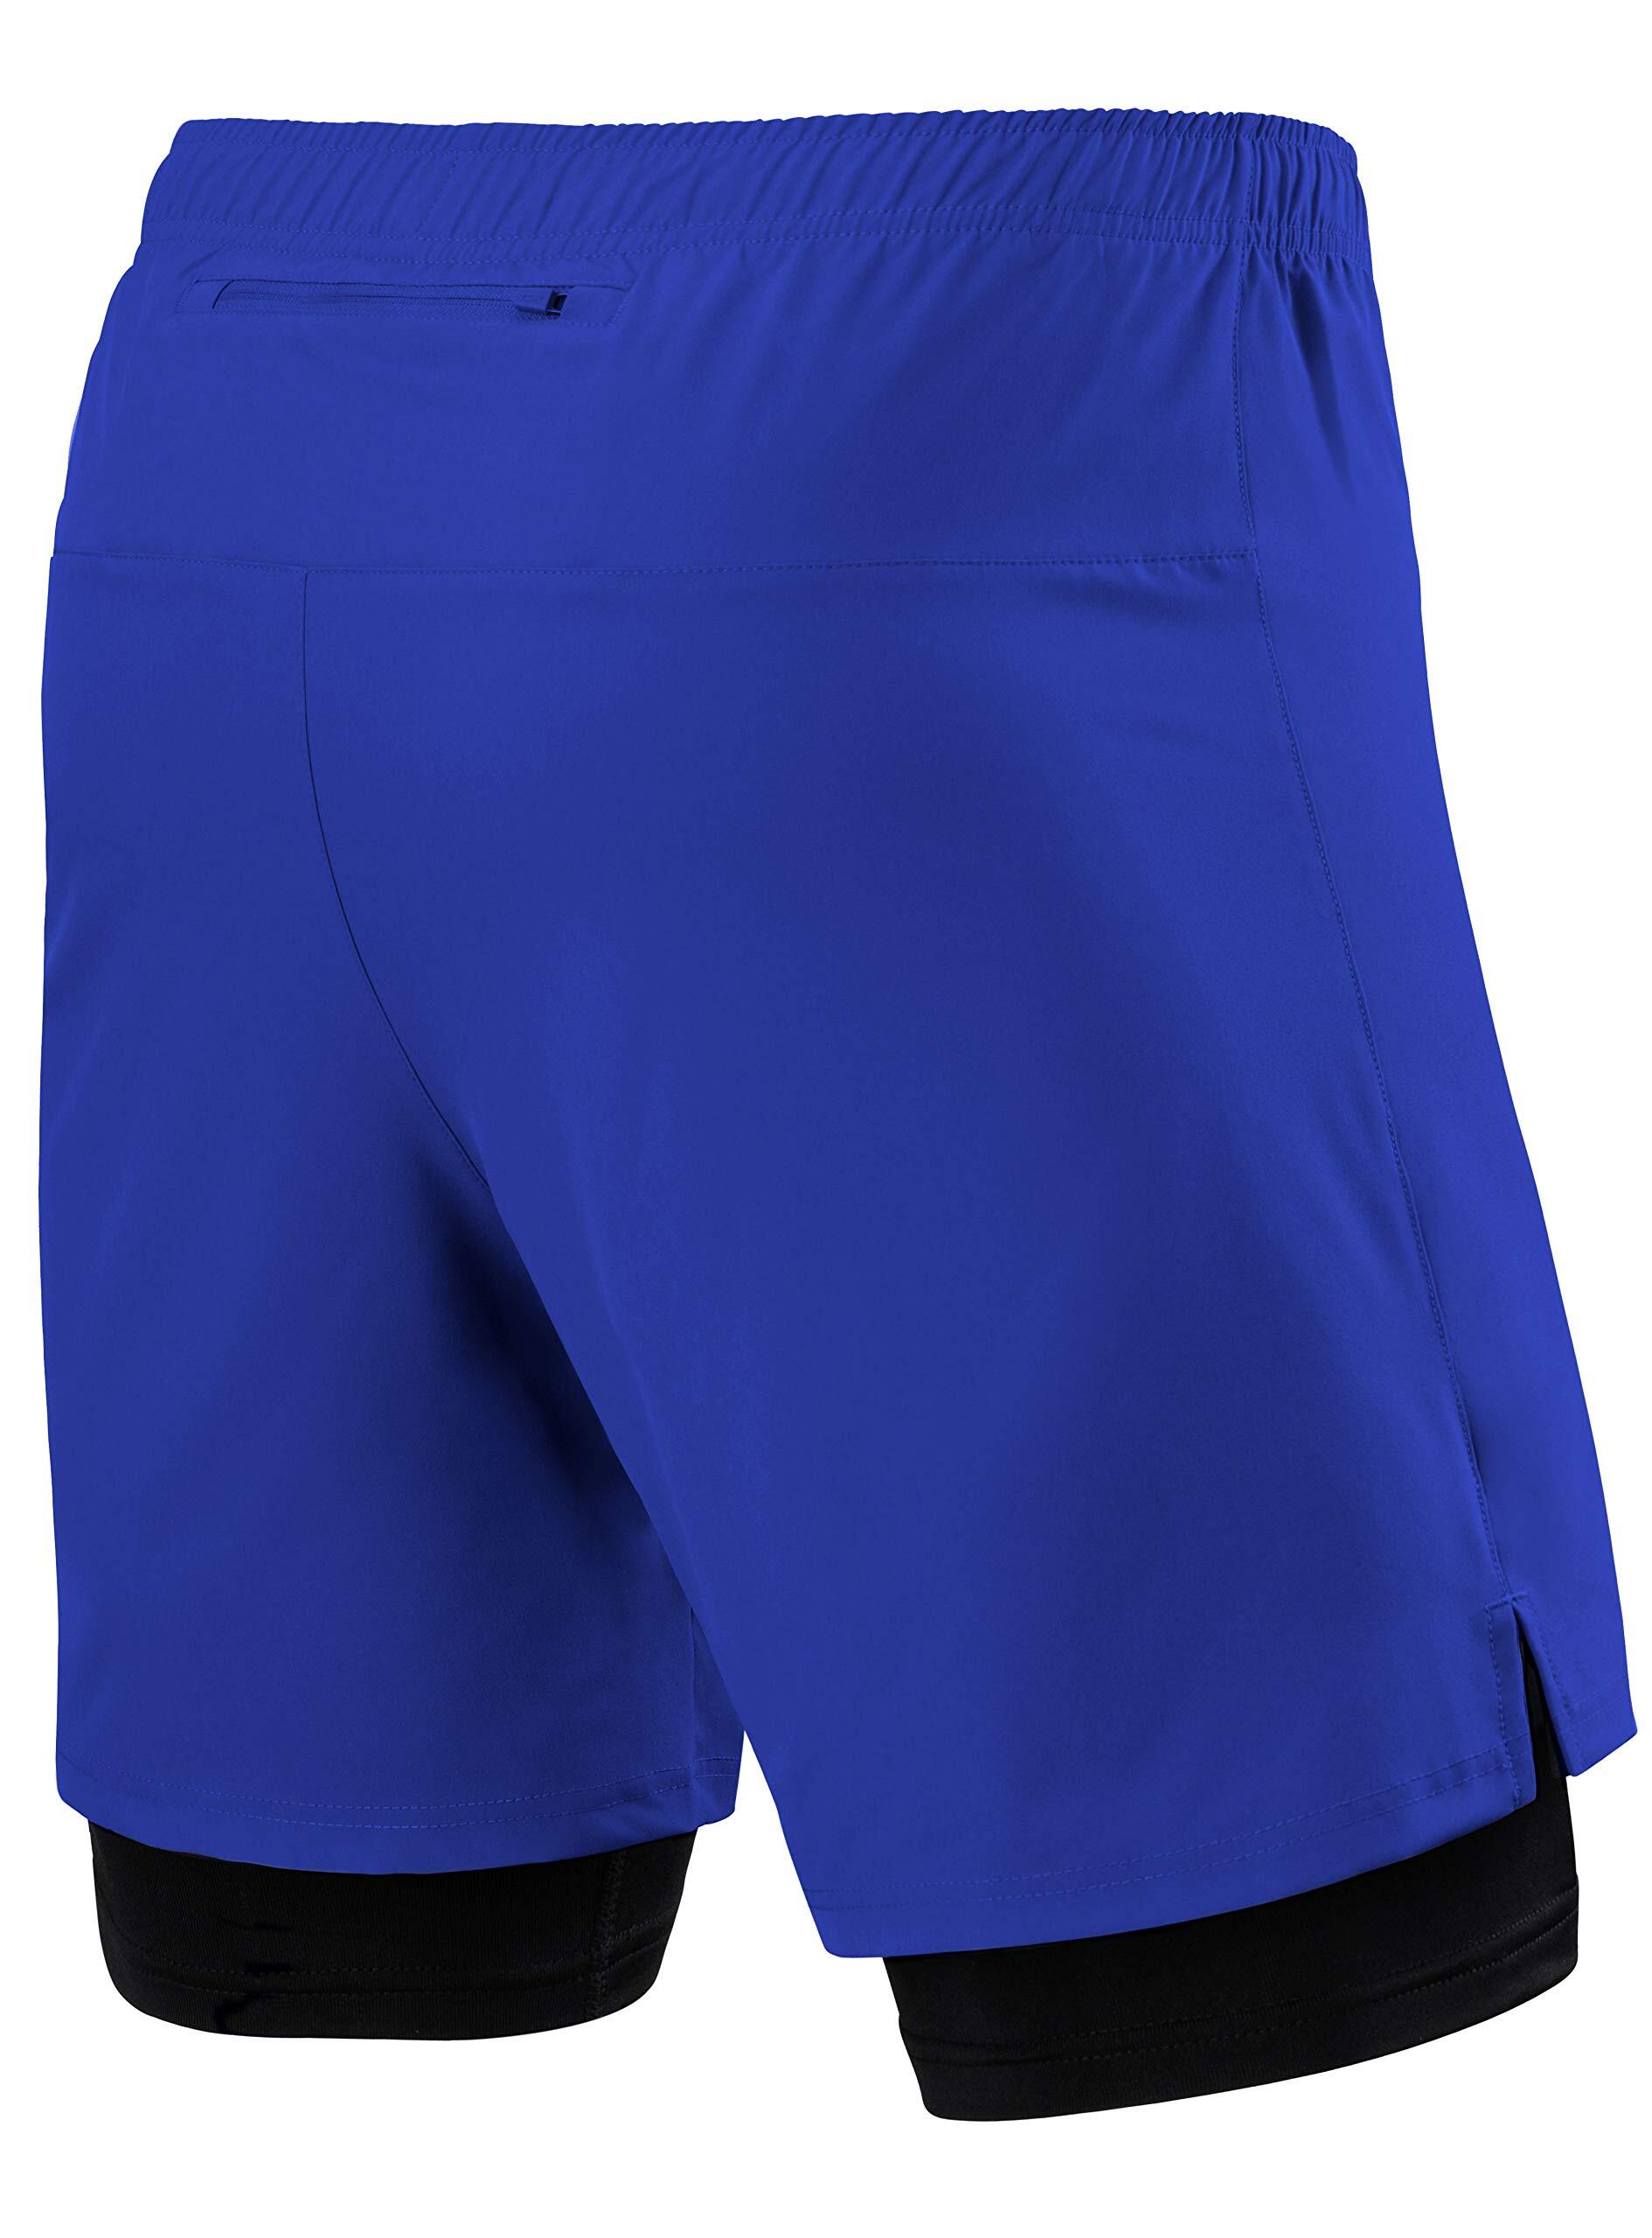 Men's Ultra 2-in-1 Running Shorts with Key Pocket - Cobalt / Black 2/5